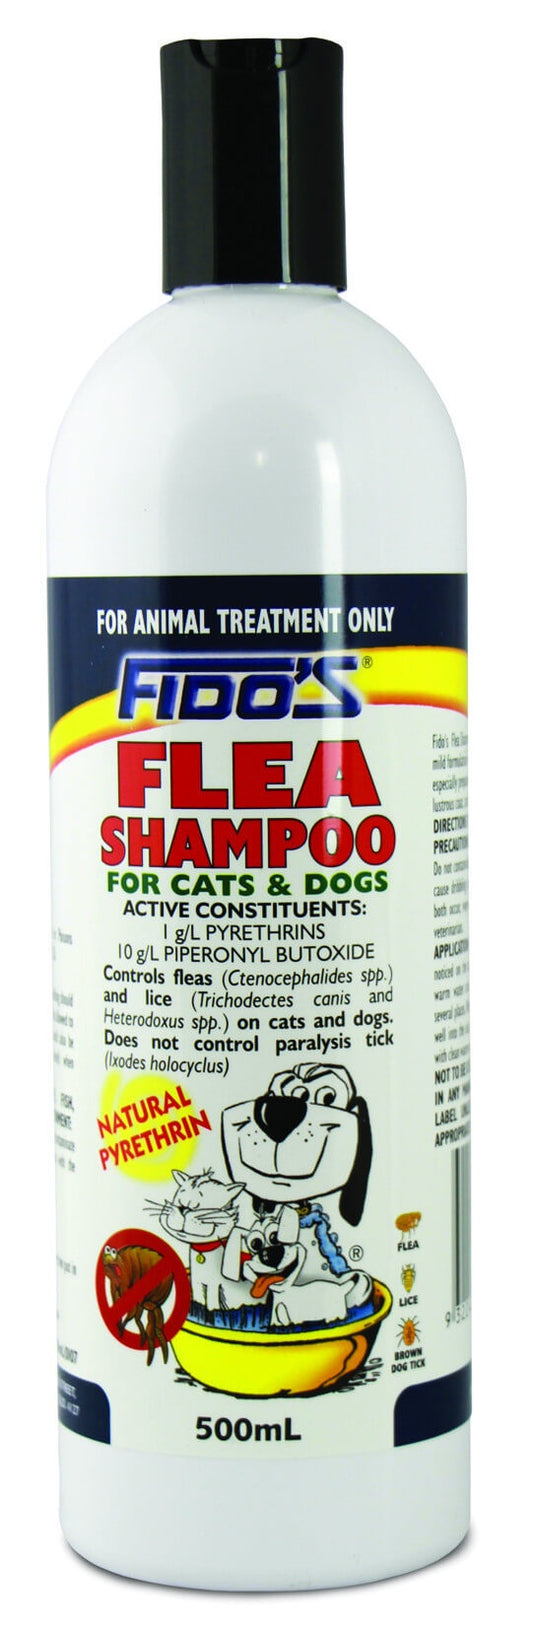 Fidos Flea Shampoo - 500ml